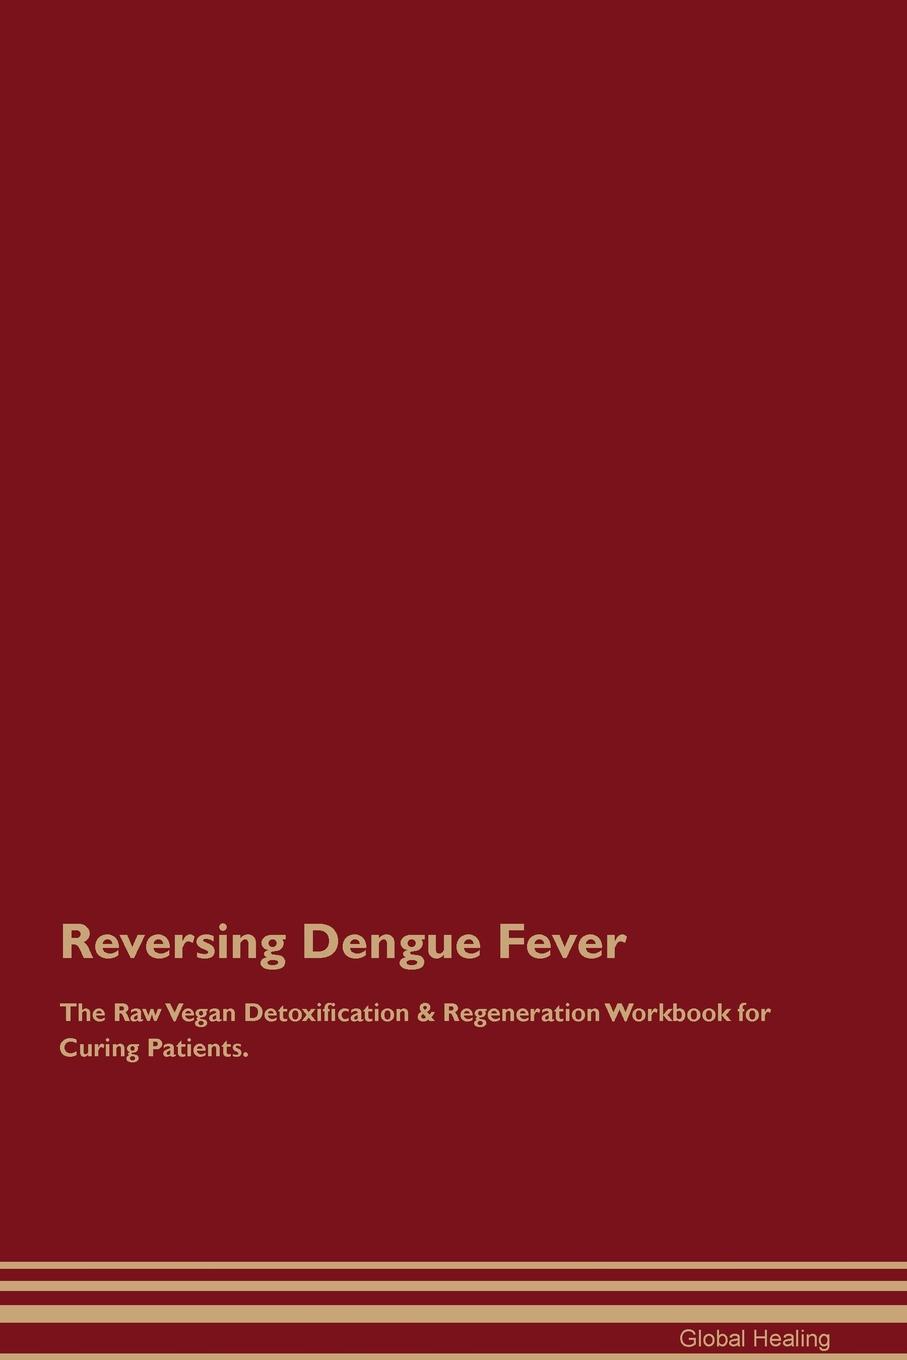 Reversing Dengue Fever The Raw Vegan Detoxification & Regeneration Workbook for Curing Patients